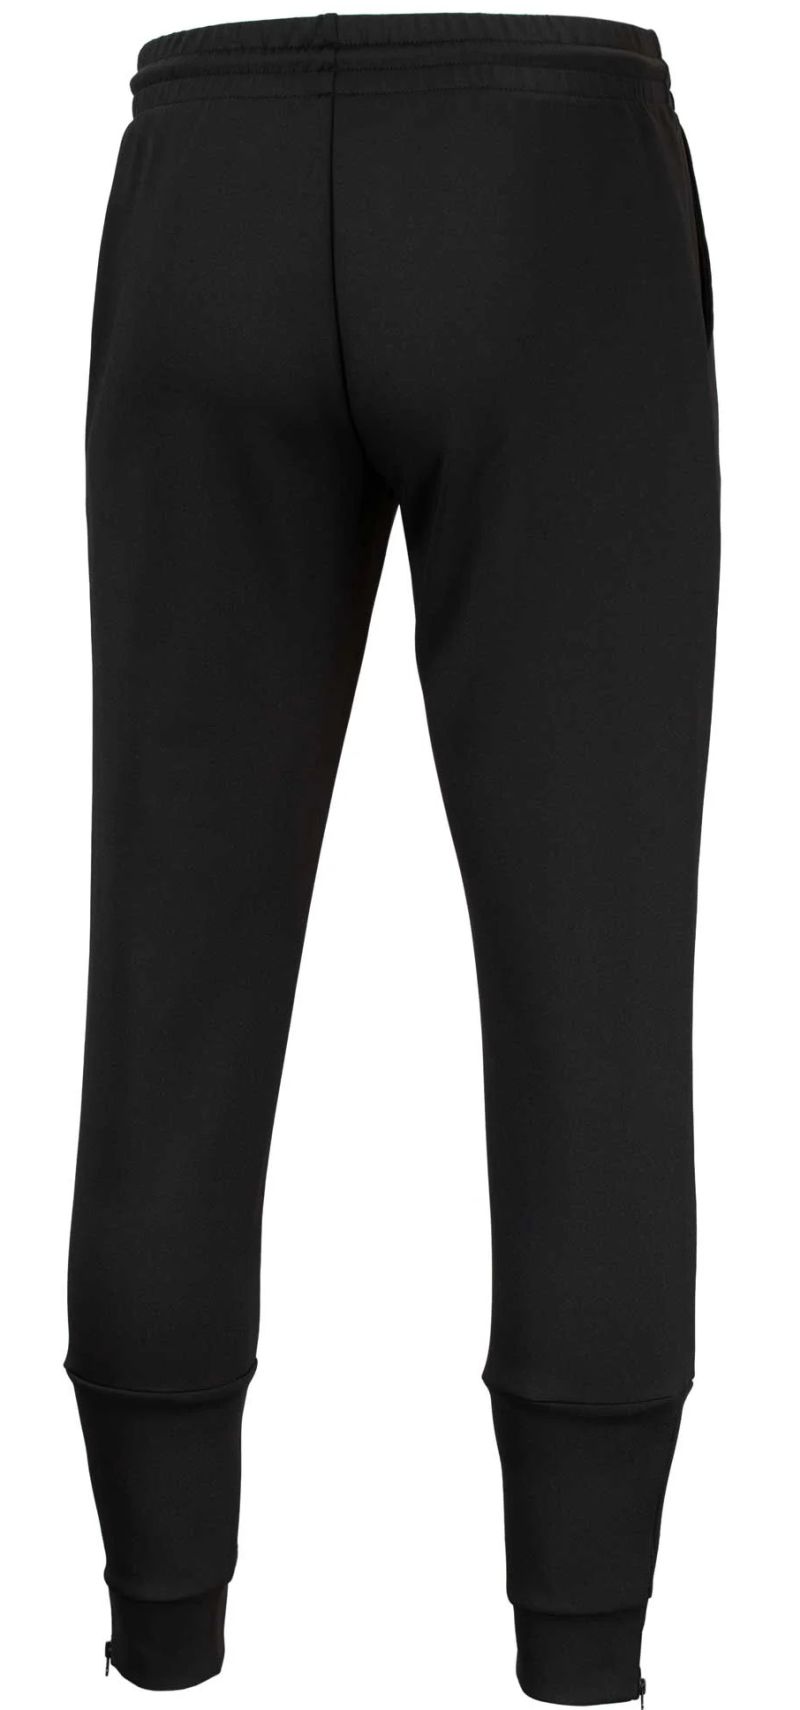 Men's trousers Lotto Squadra III Pant - all black